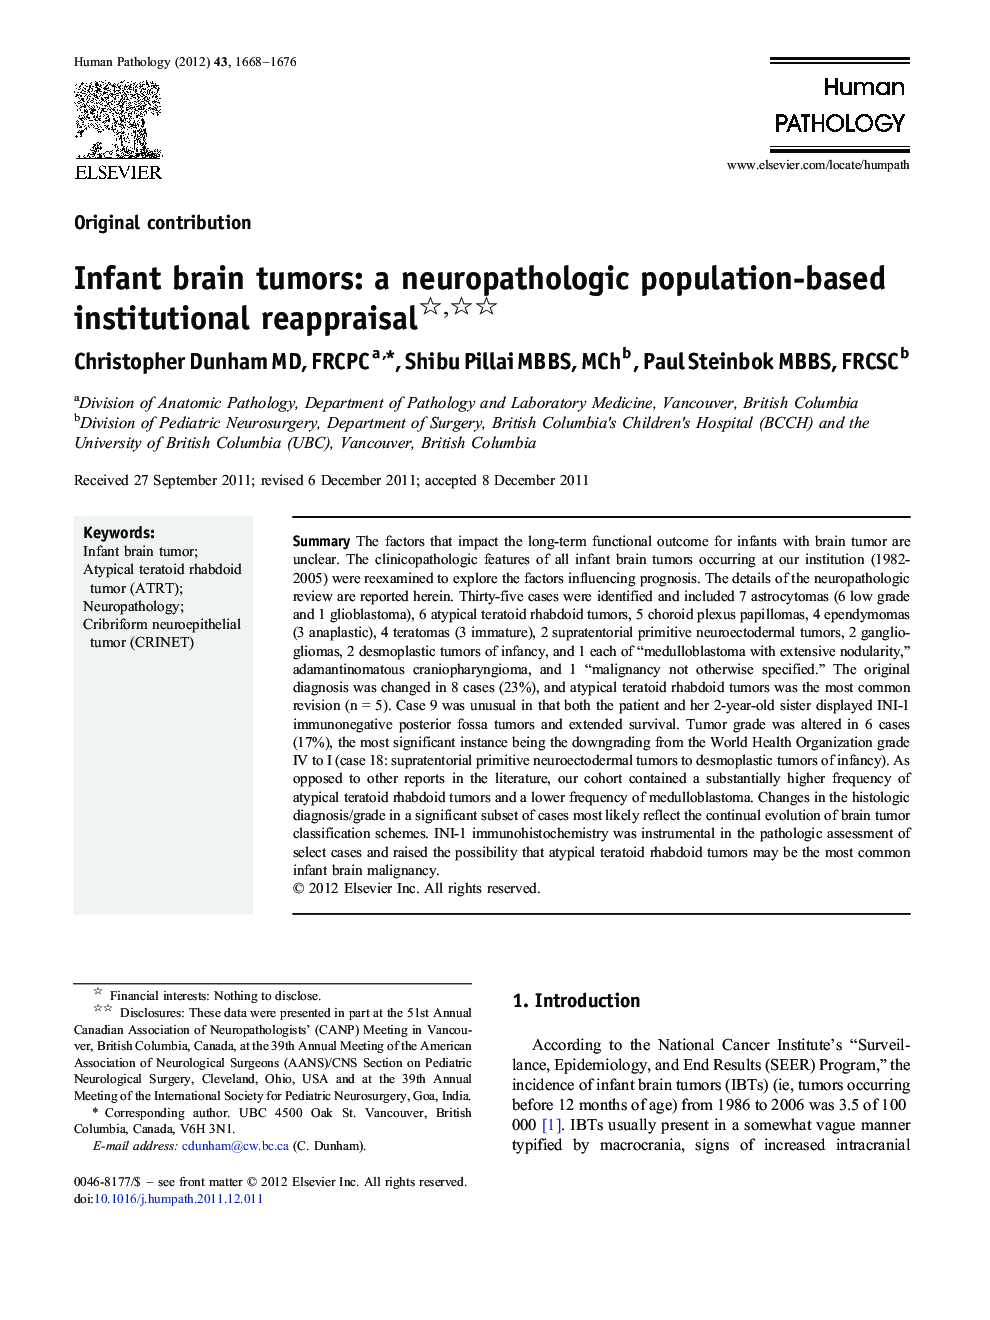 Infant brain tumors: a neuropathologic population-based institutional reappraisal 